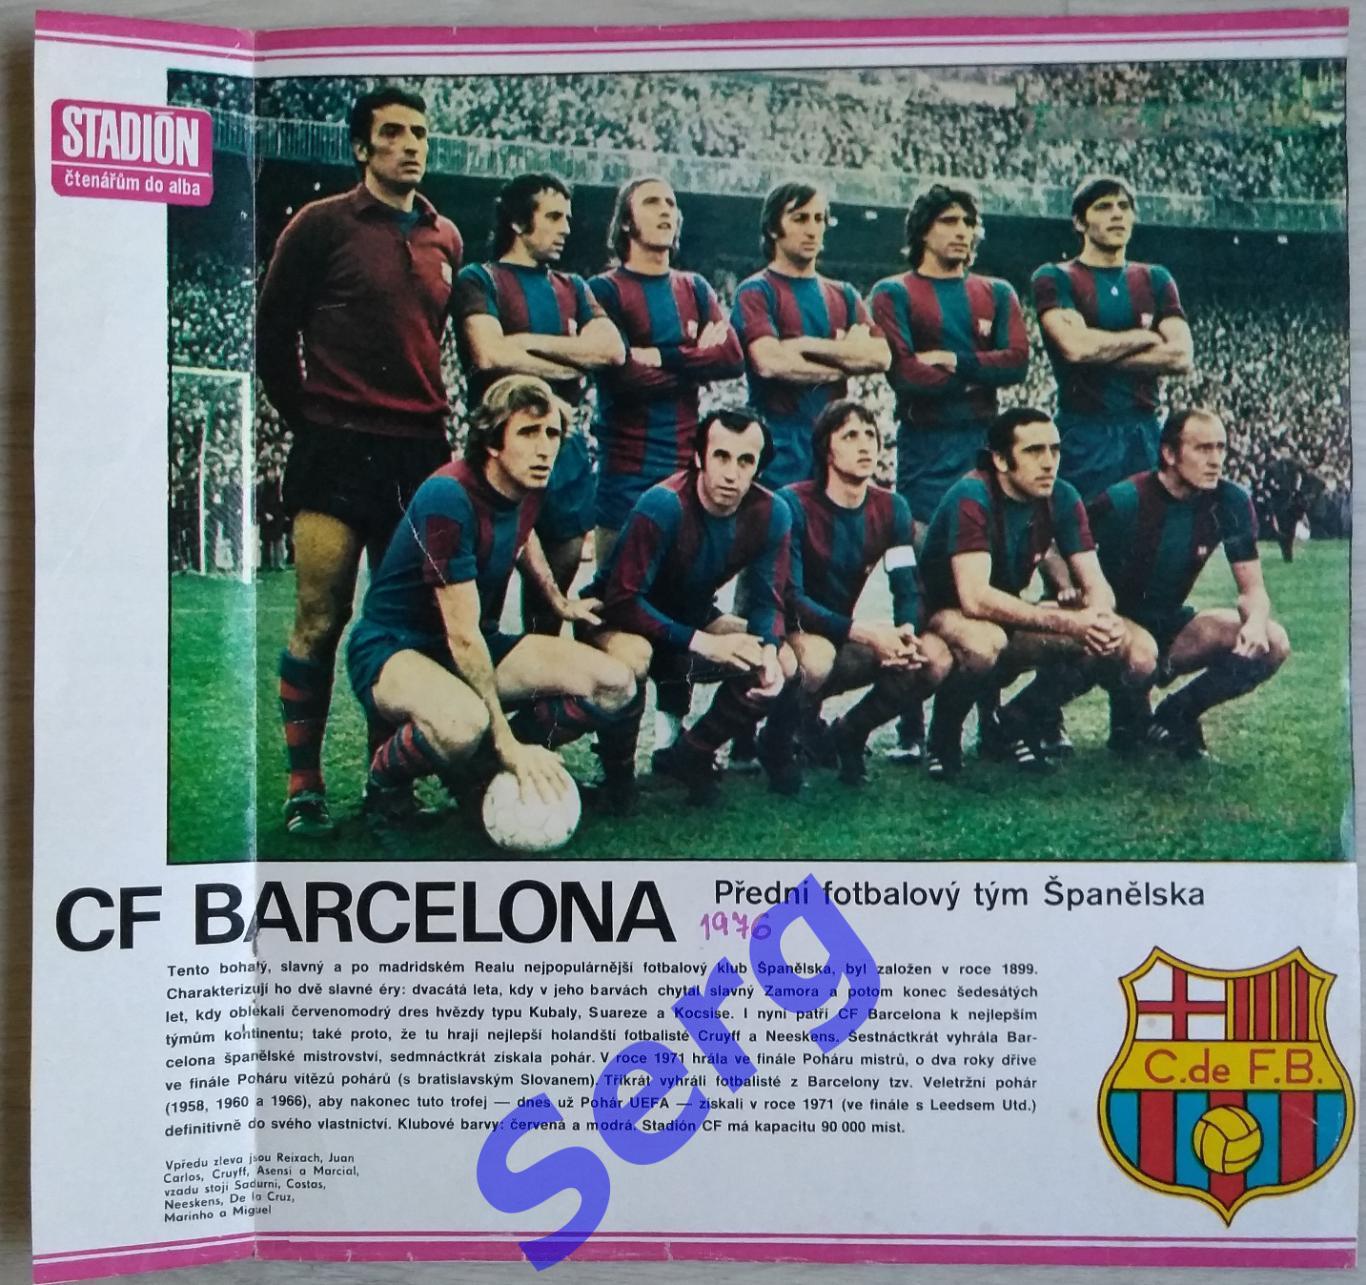 Постер Барселона Барселона, Испания из журнала Стадион (Stadion) 1976 год